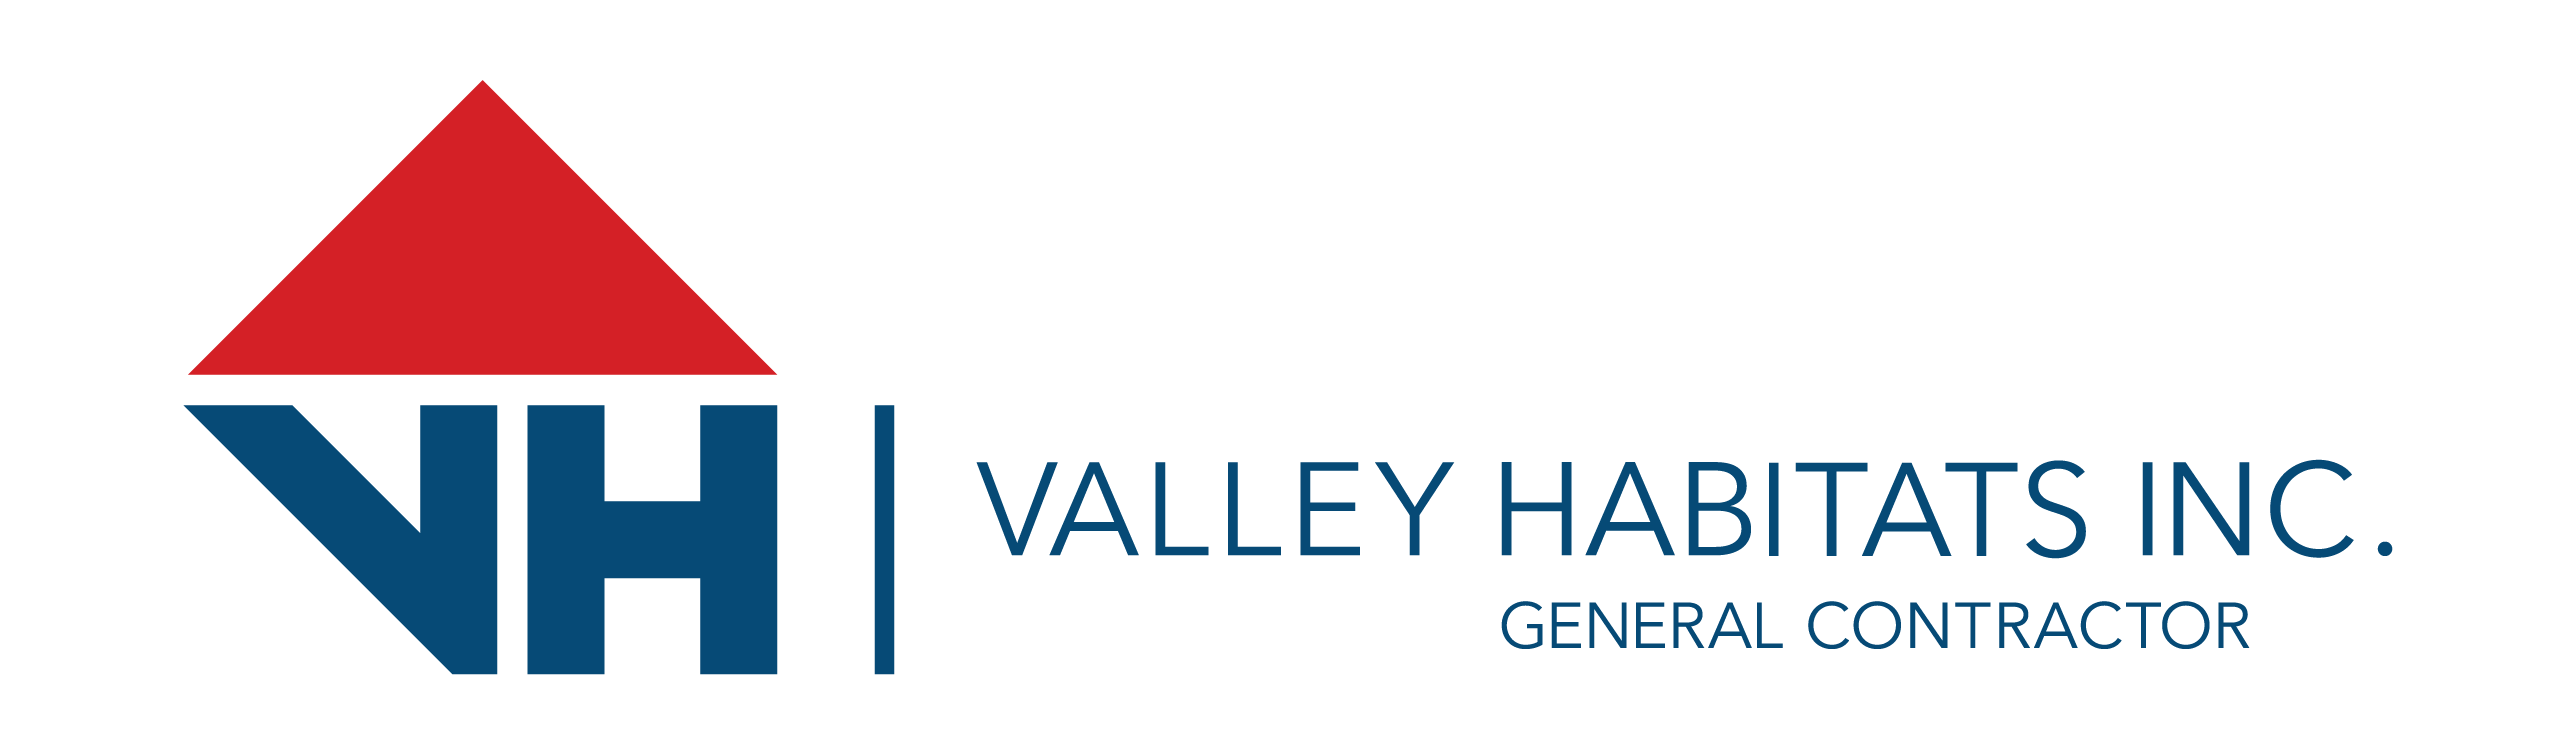 Valley Habitats Remodeling